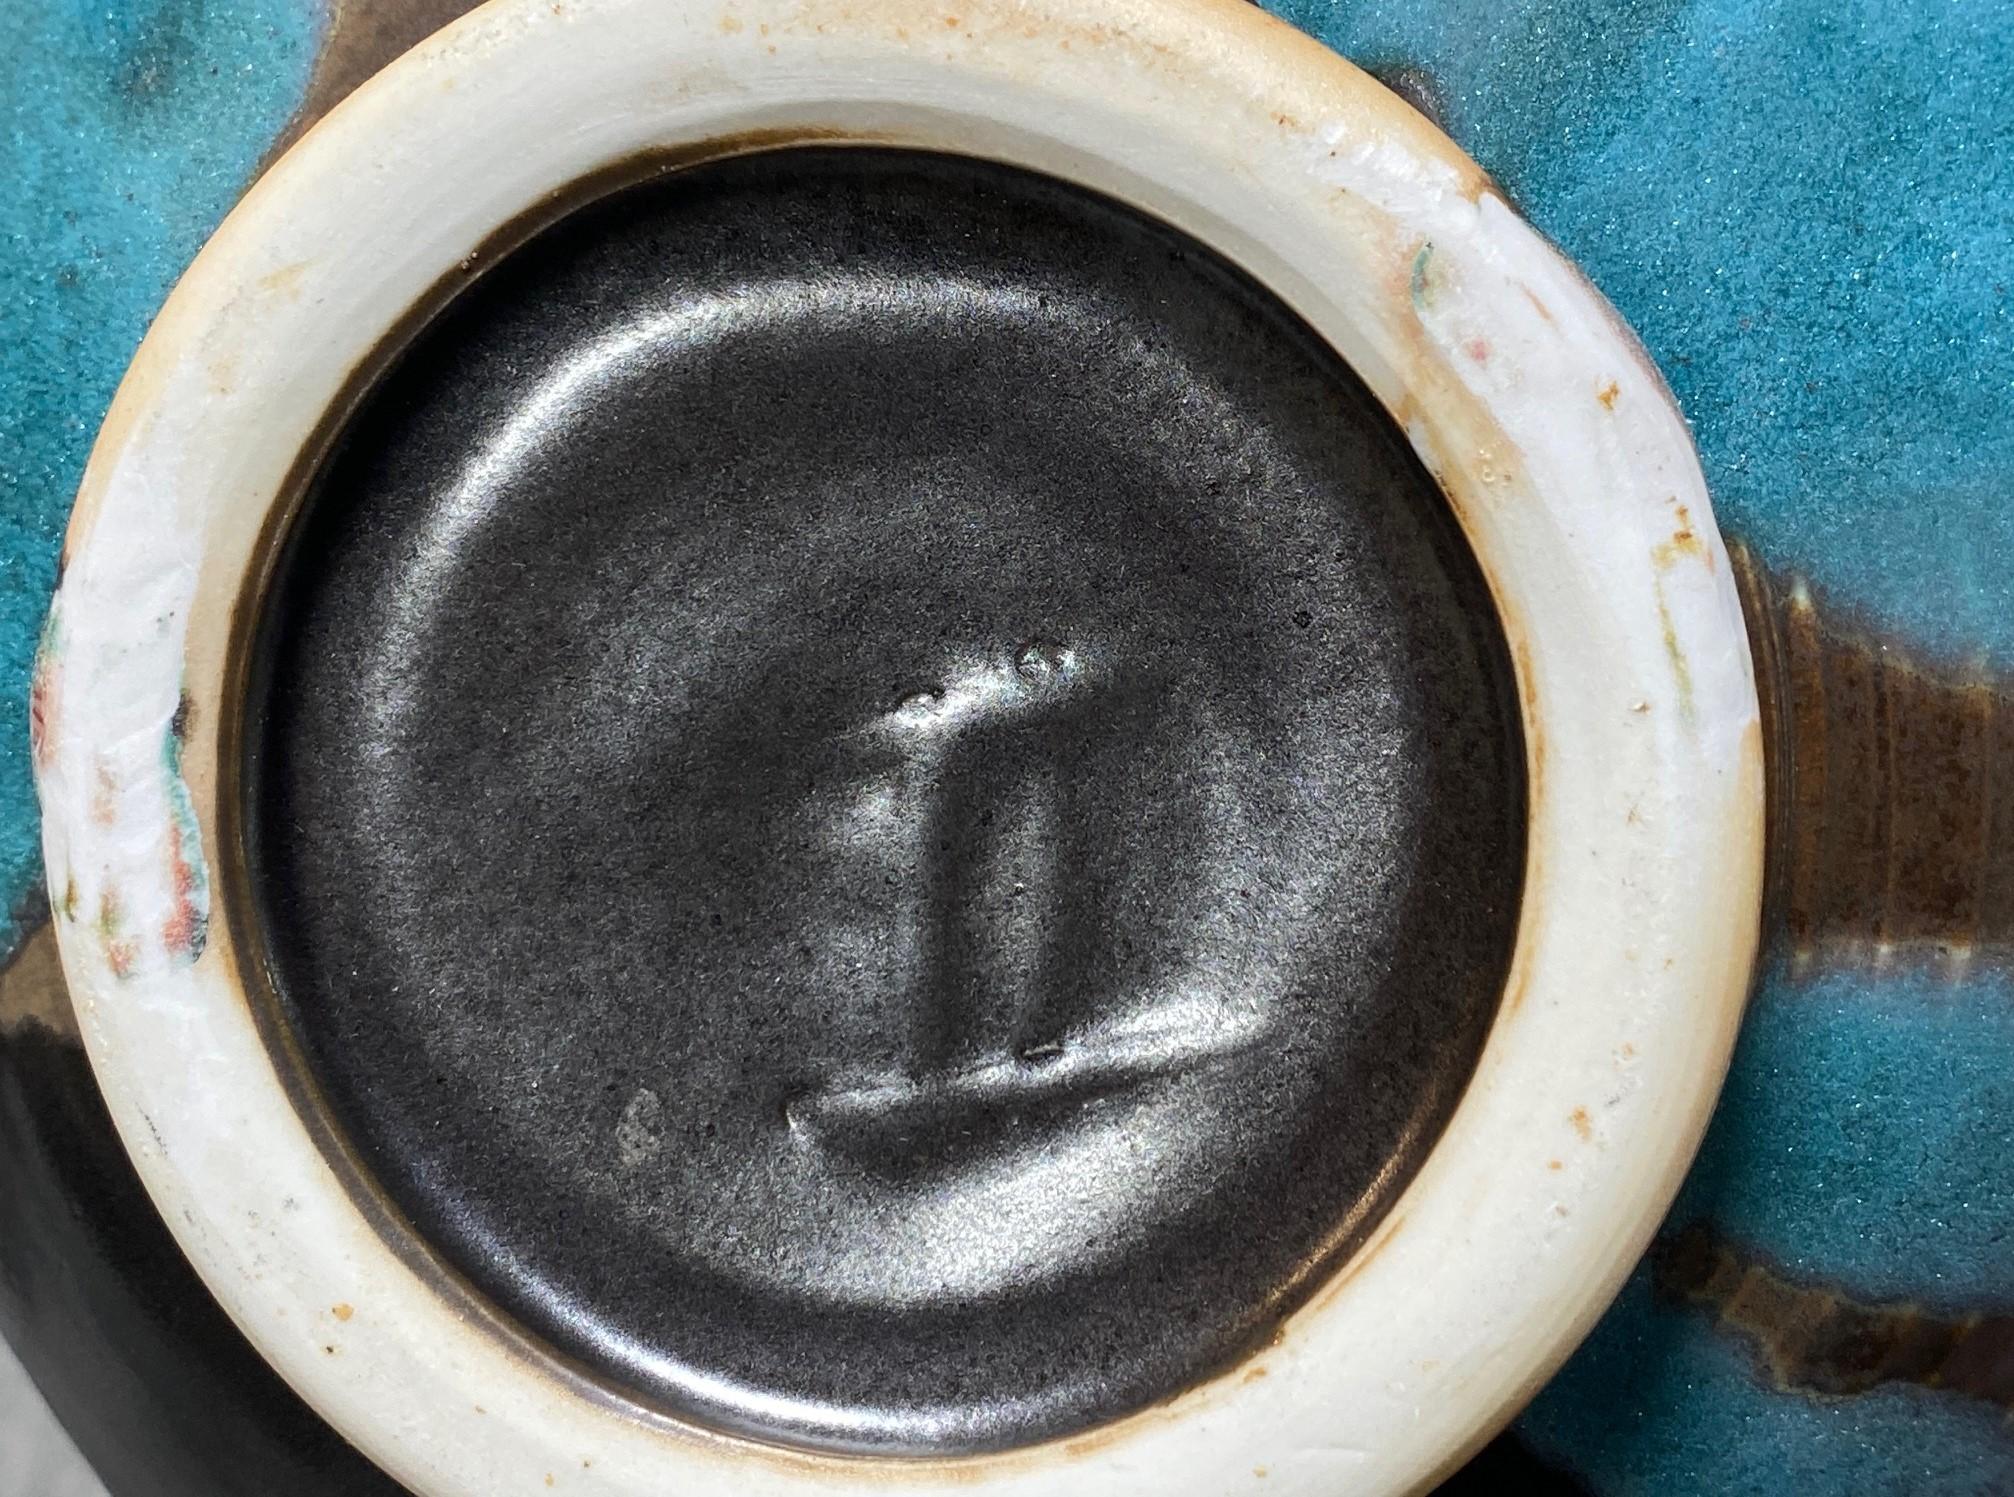 Tashiko Tazaezu Signed Mid-Century Modern Japanese Hawaiian Studio Pottery Bowl For Sale 10